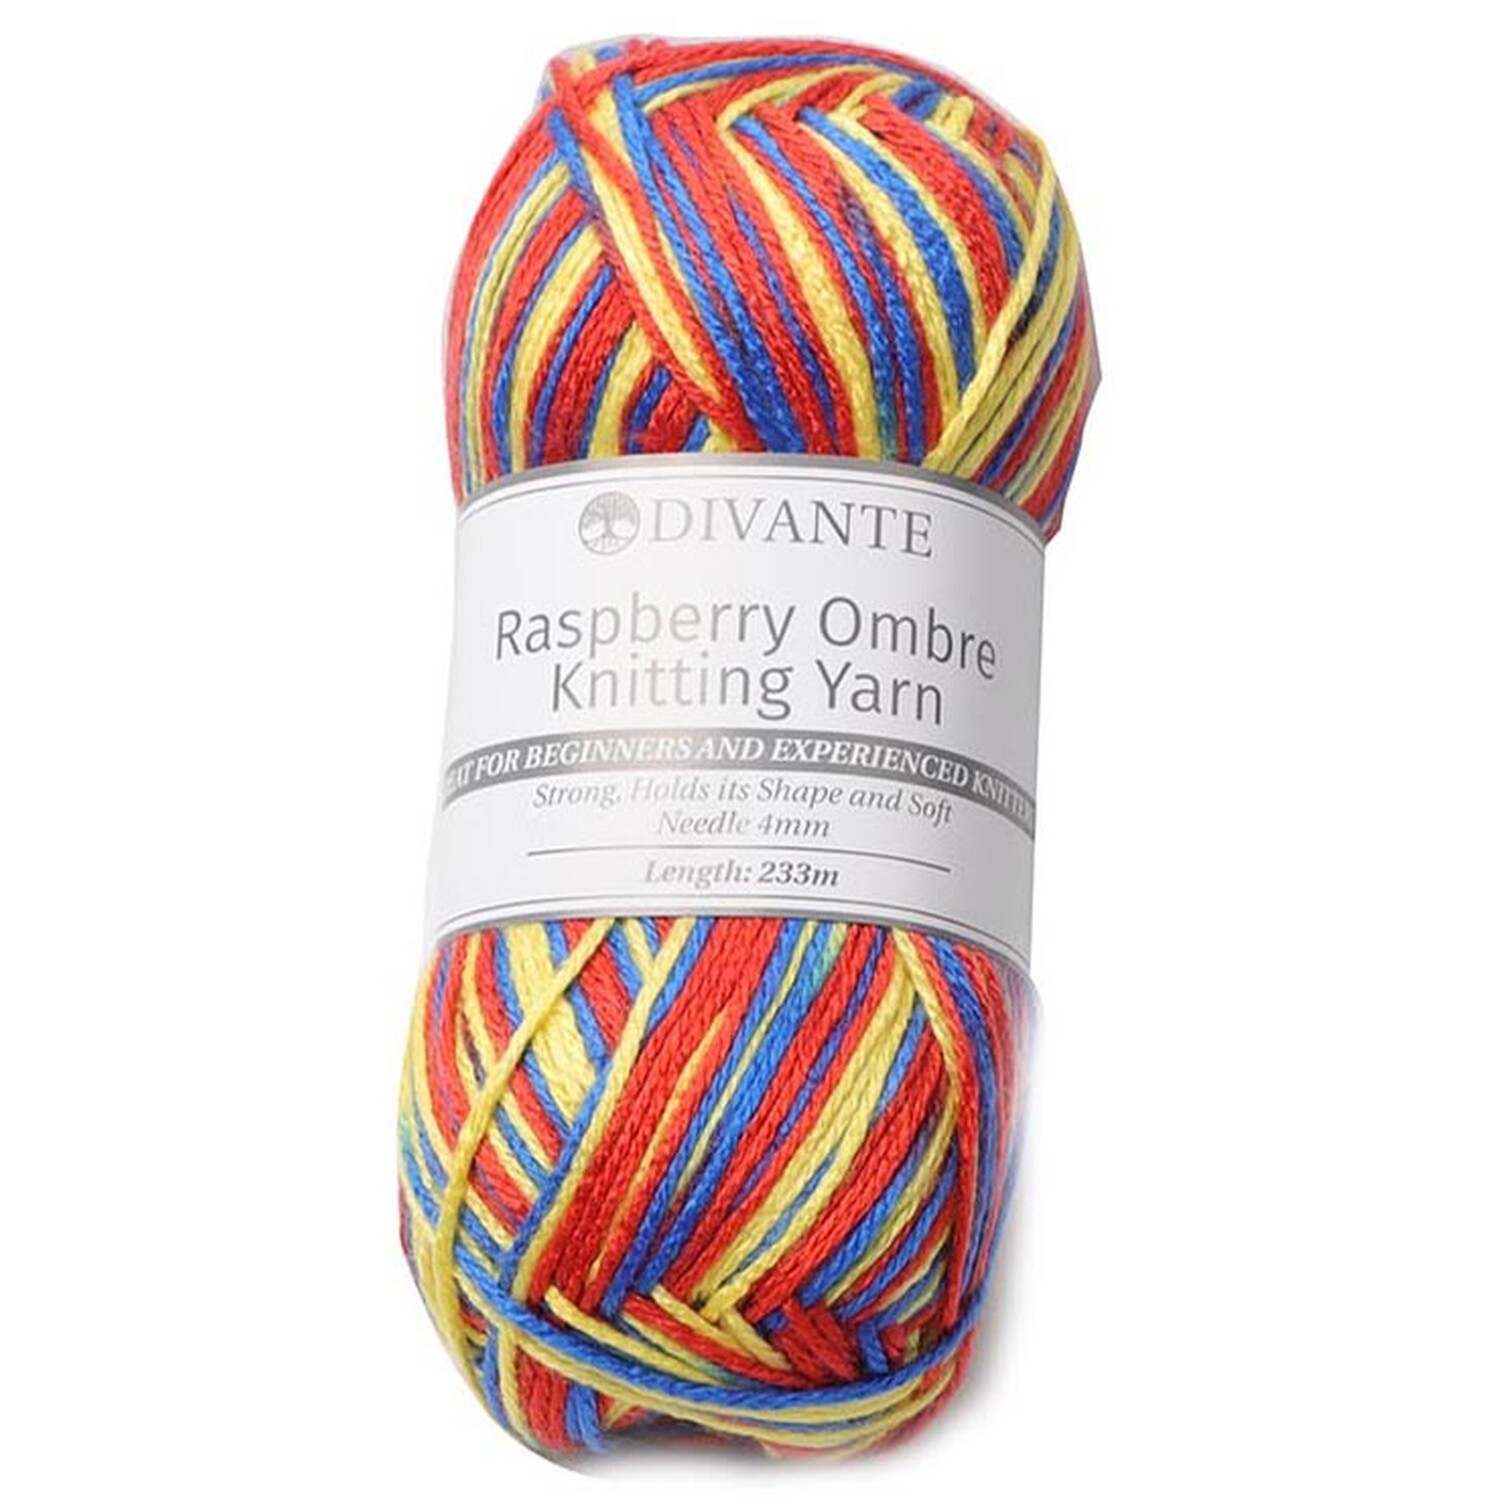 Divante Knitting Wool - Raspberry Ombre Image